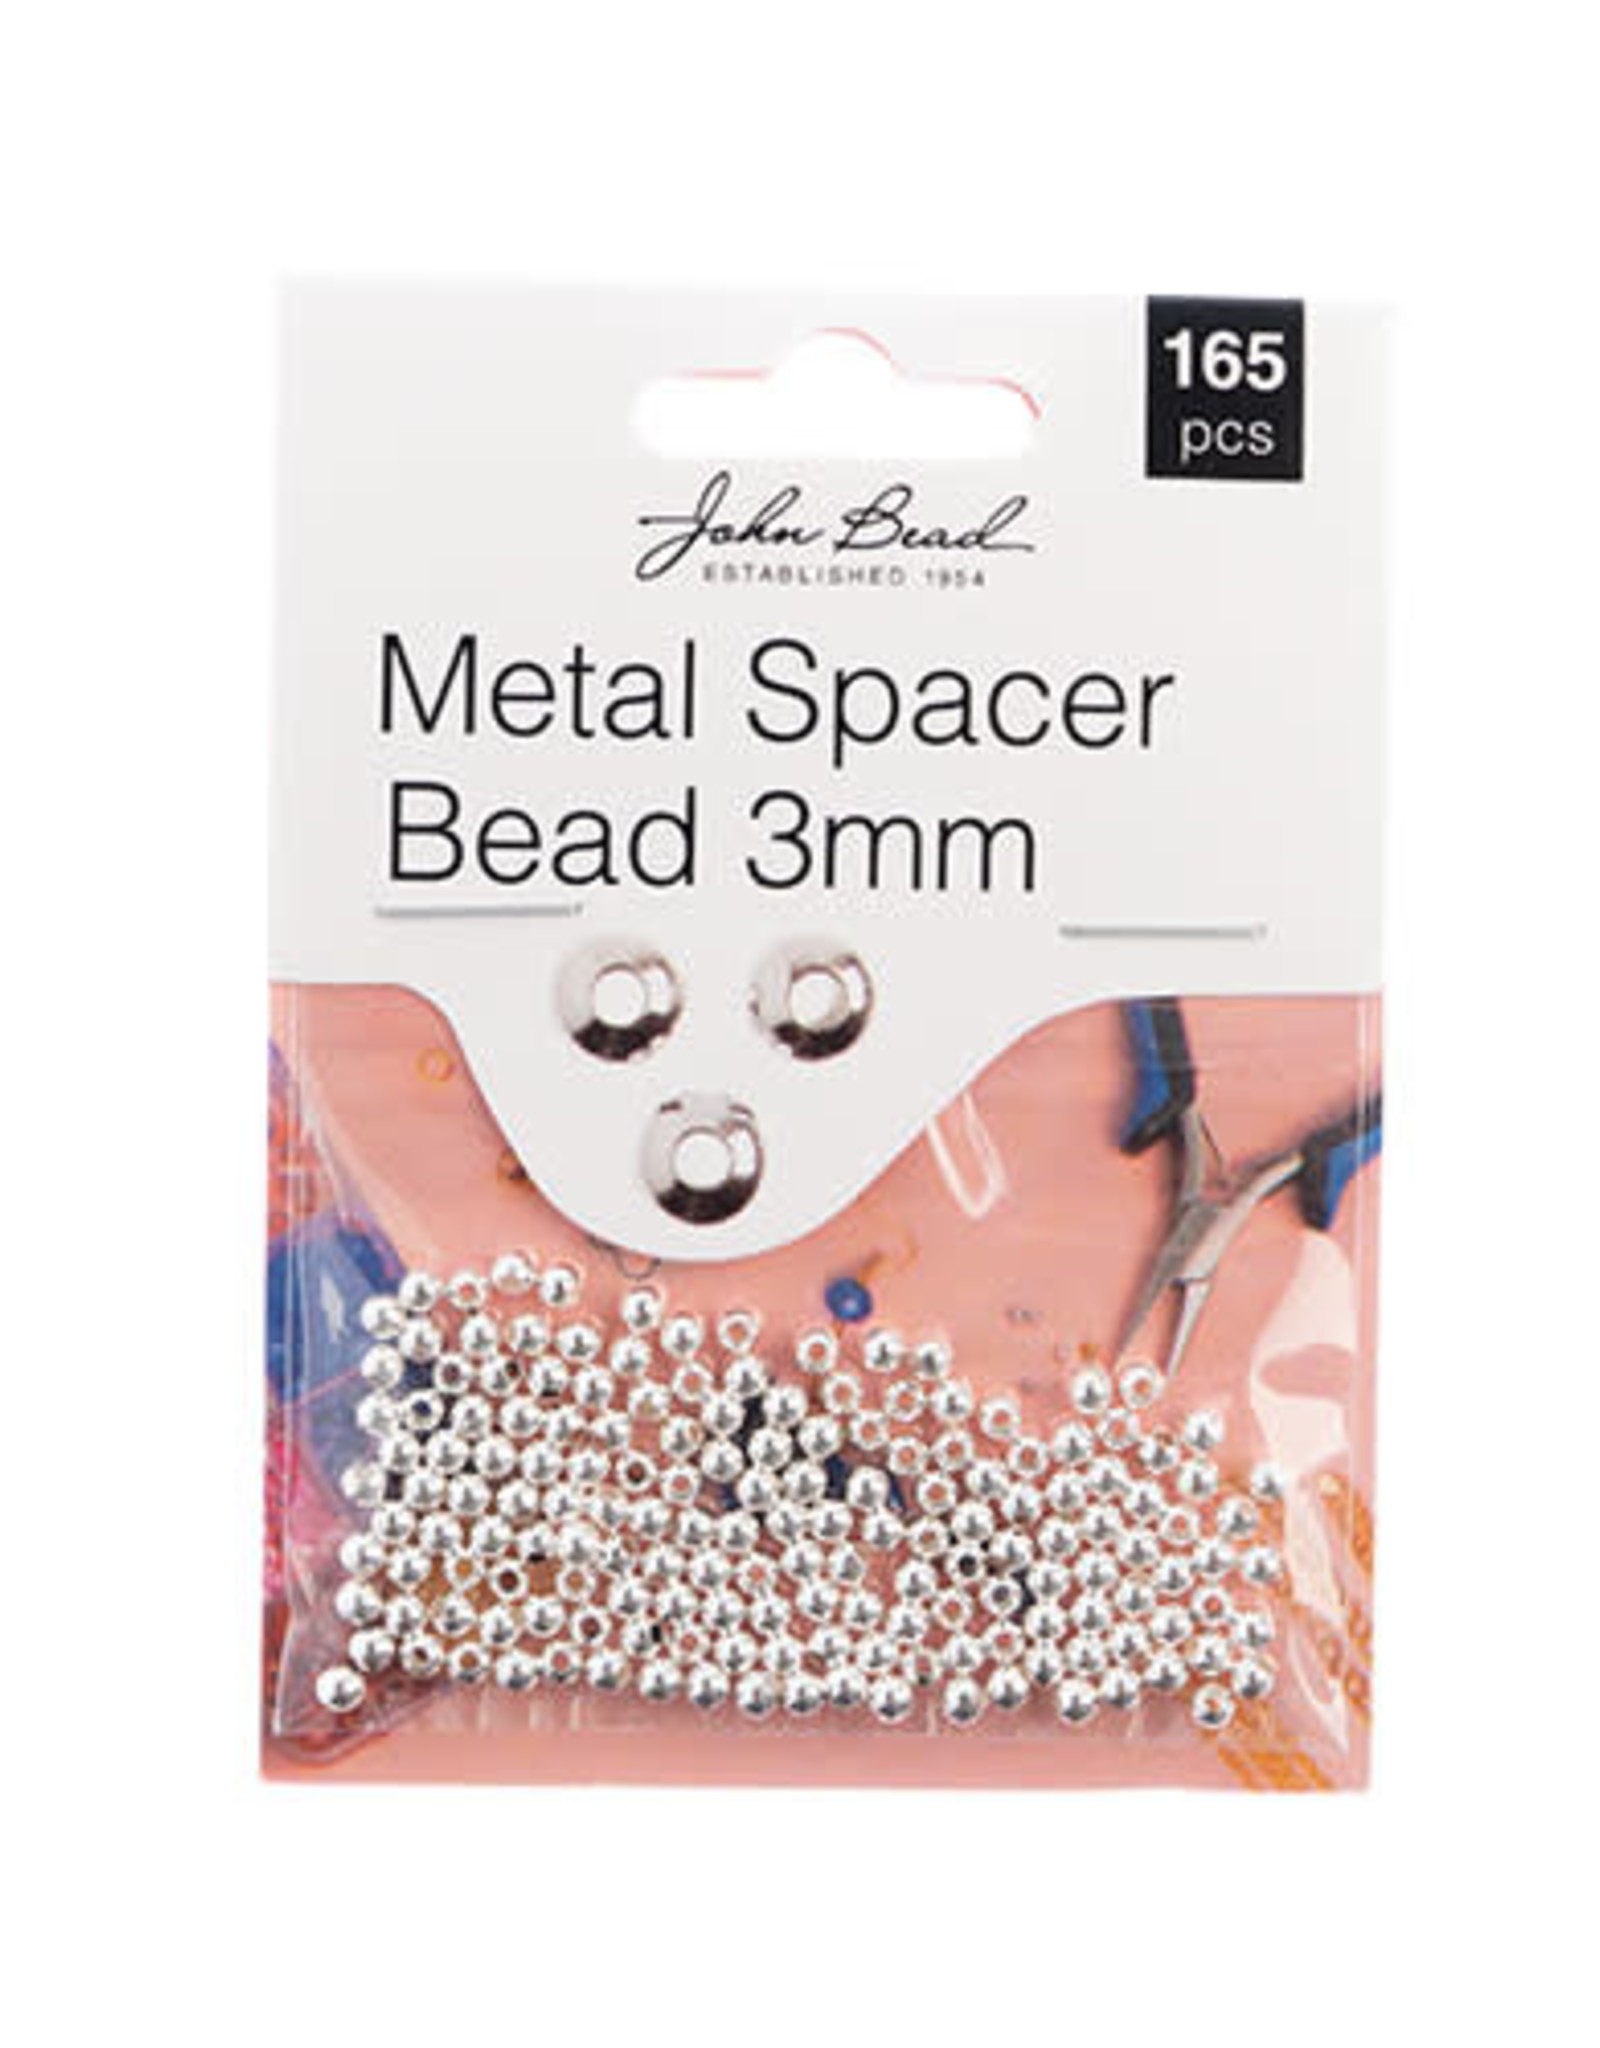 Craft Supplies Metal Spacer Bead 3mm Silver 165 pcs